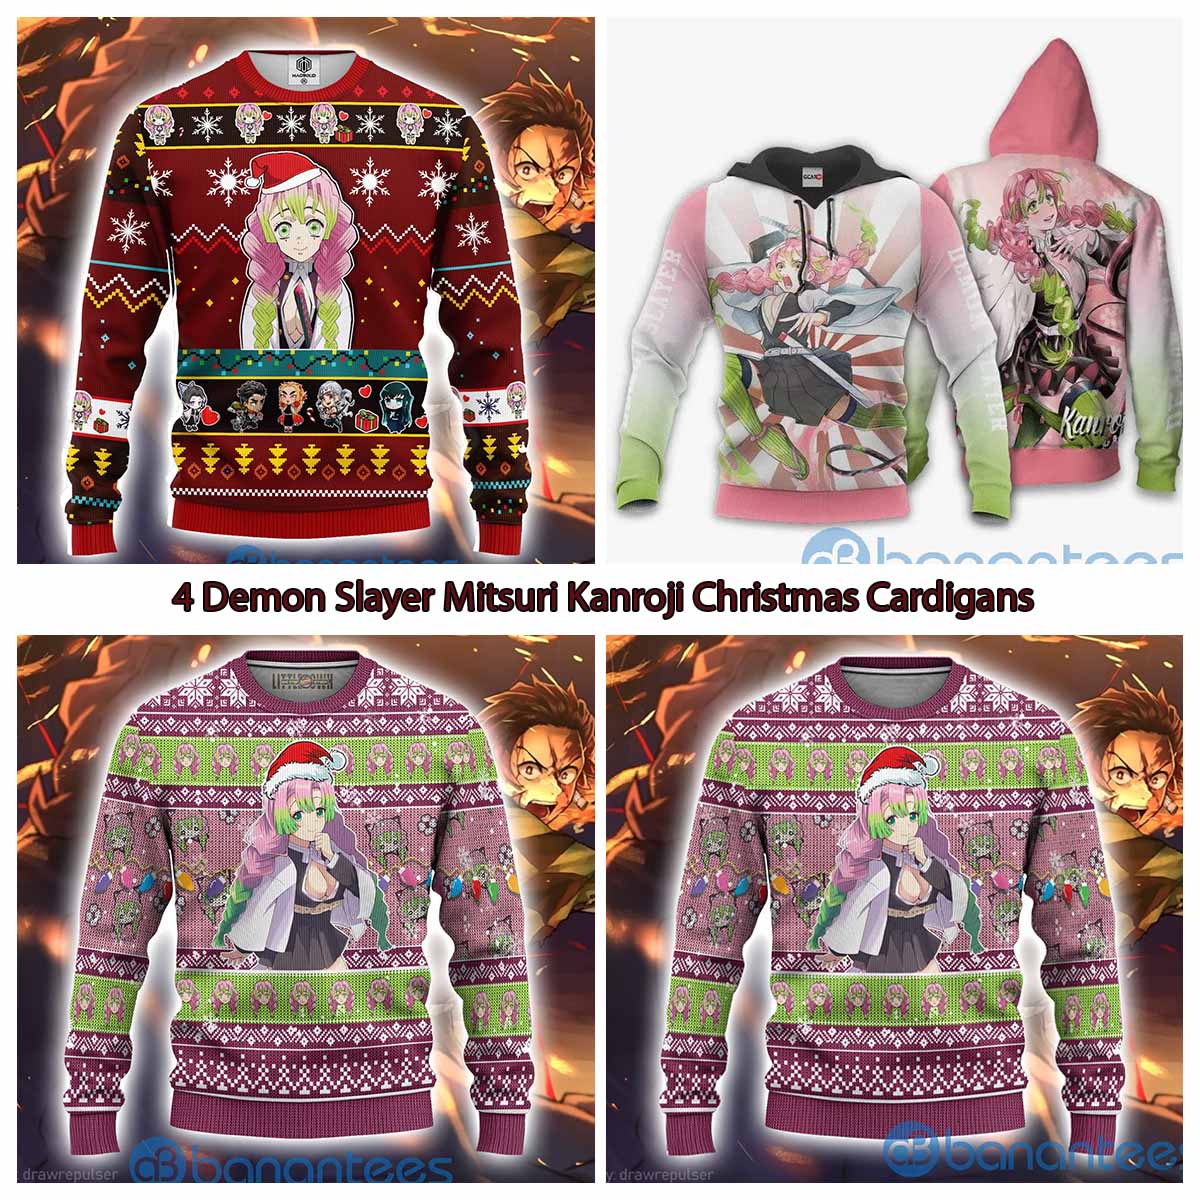 4 Demon Slayer Mitsuri Kanroji Christmas Cardigans